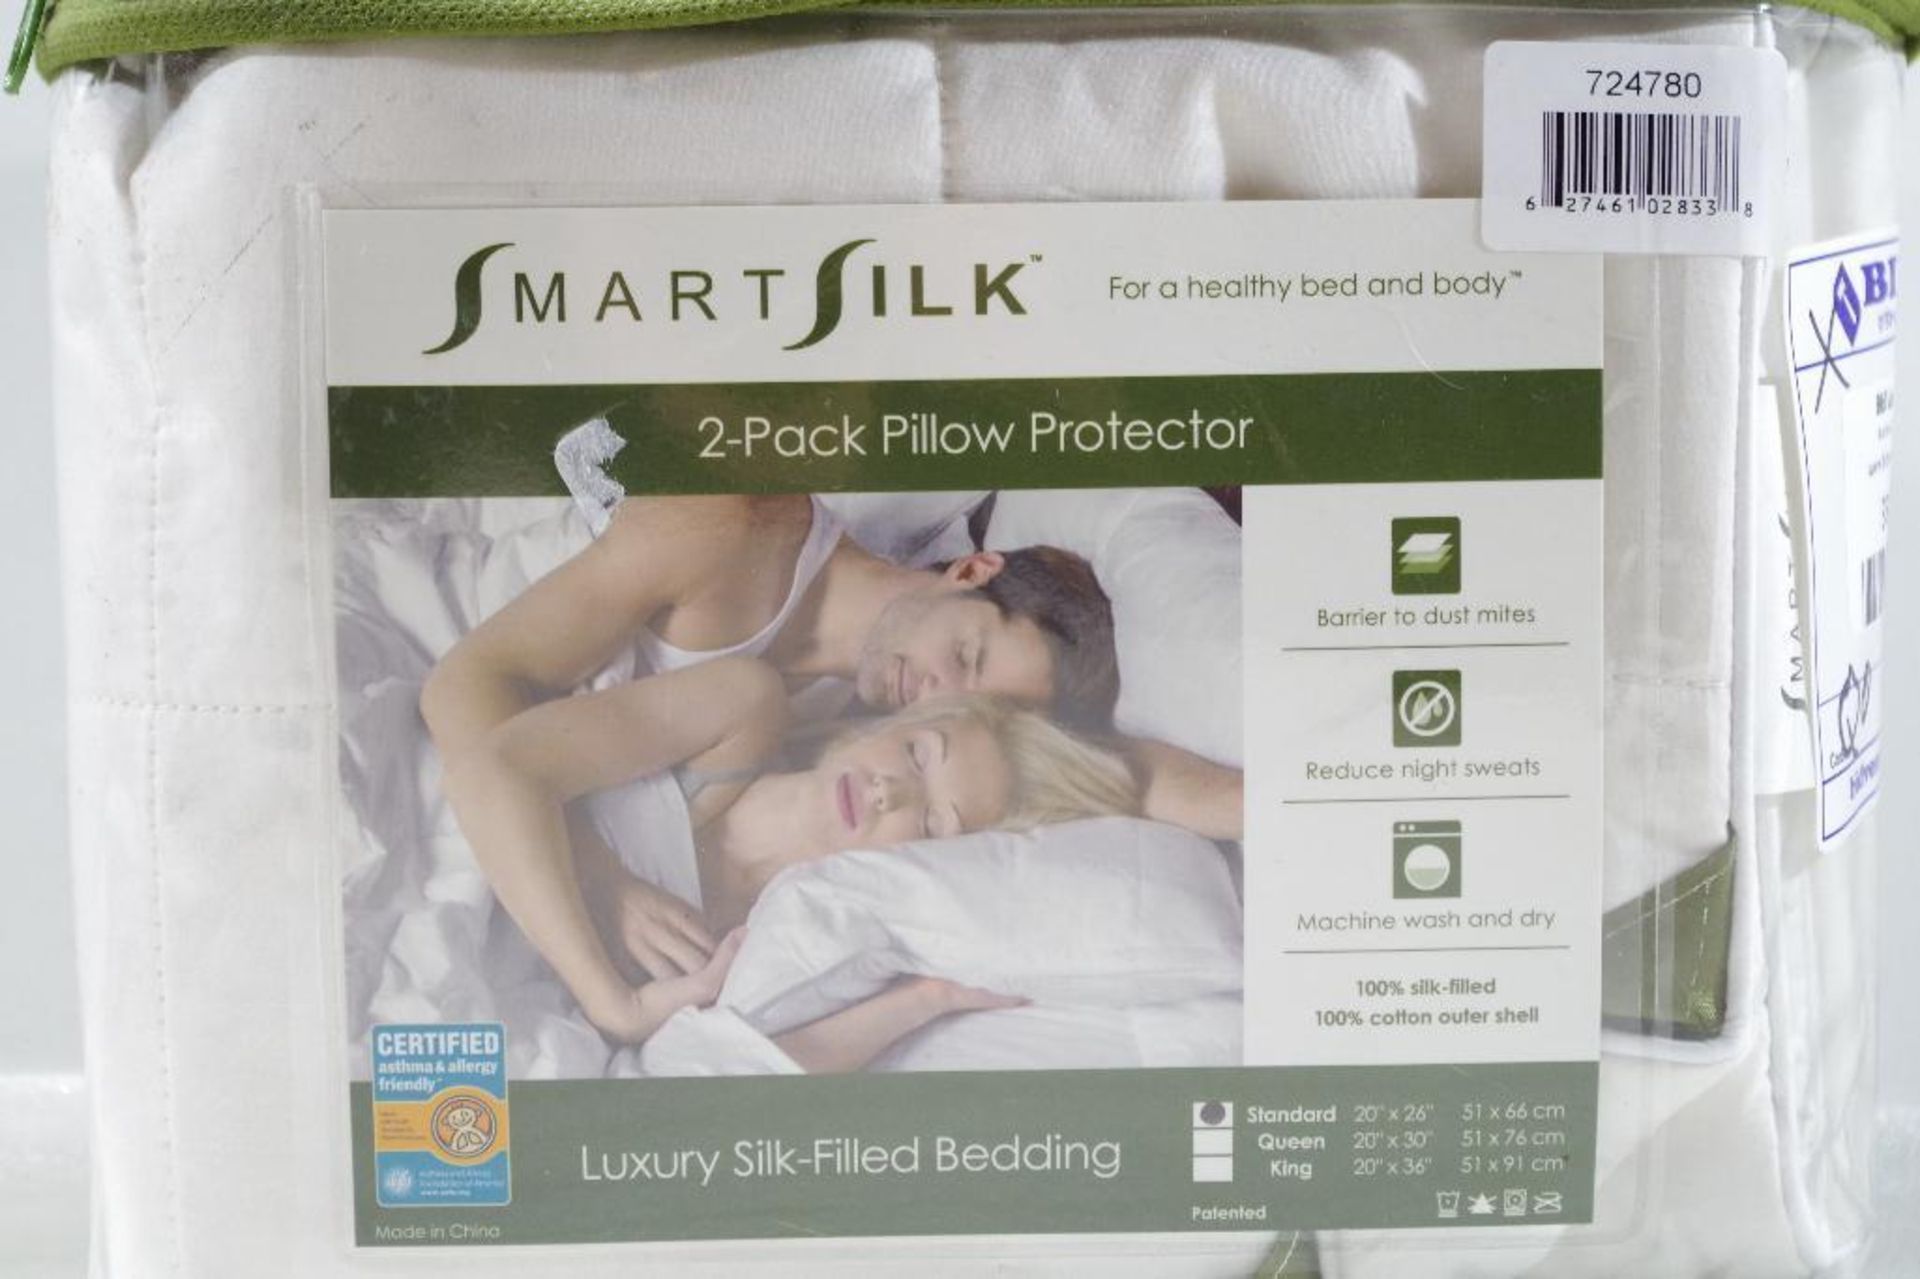 SMART SILK Standard 2-Pack Pillow Protector, Store Return - Image 2 of 2